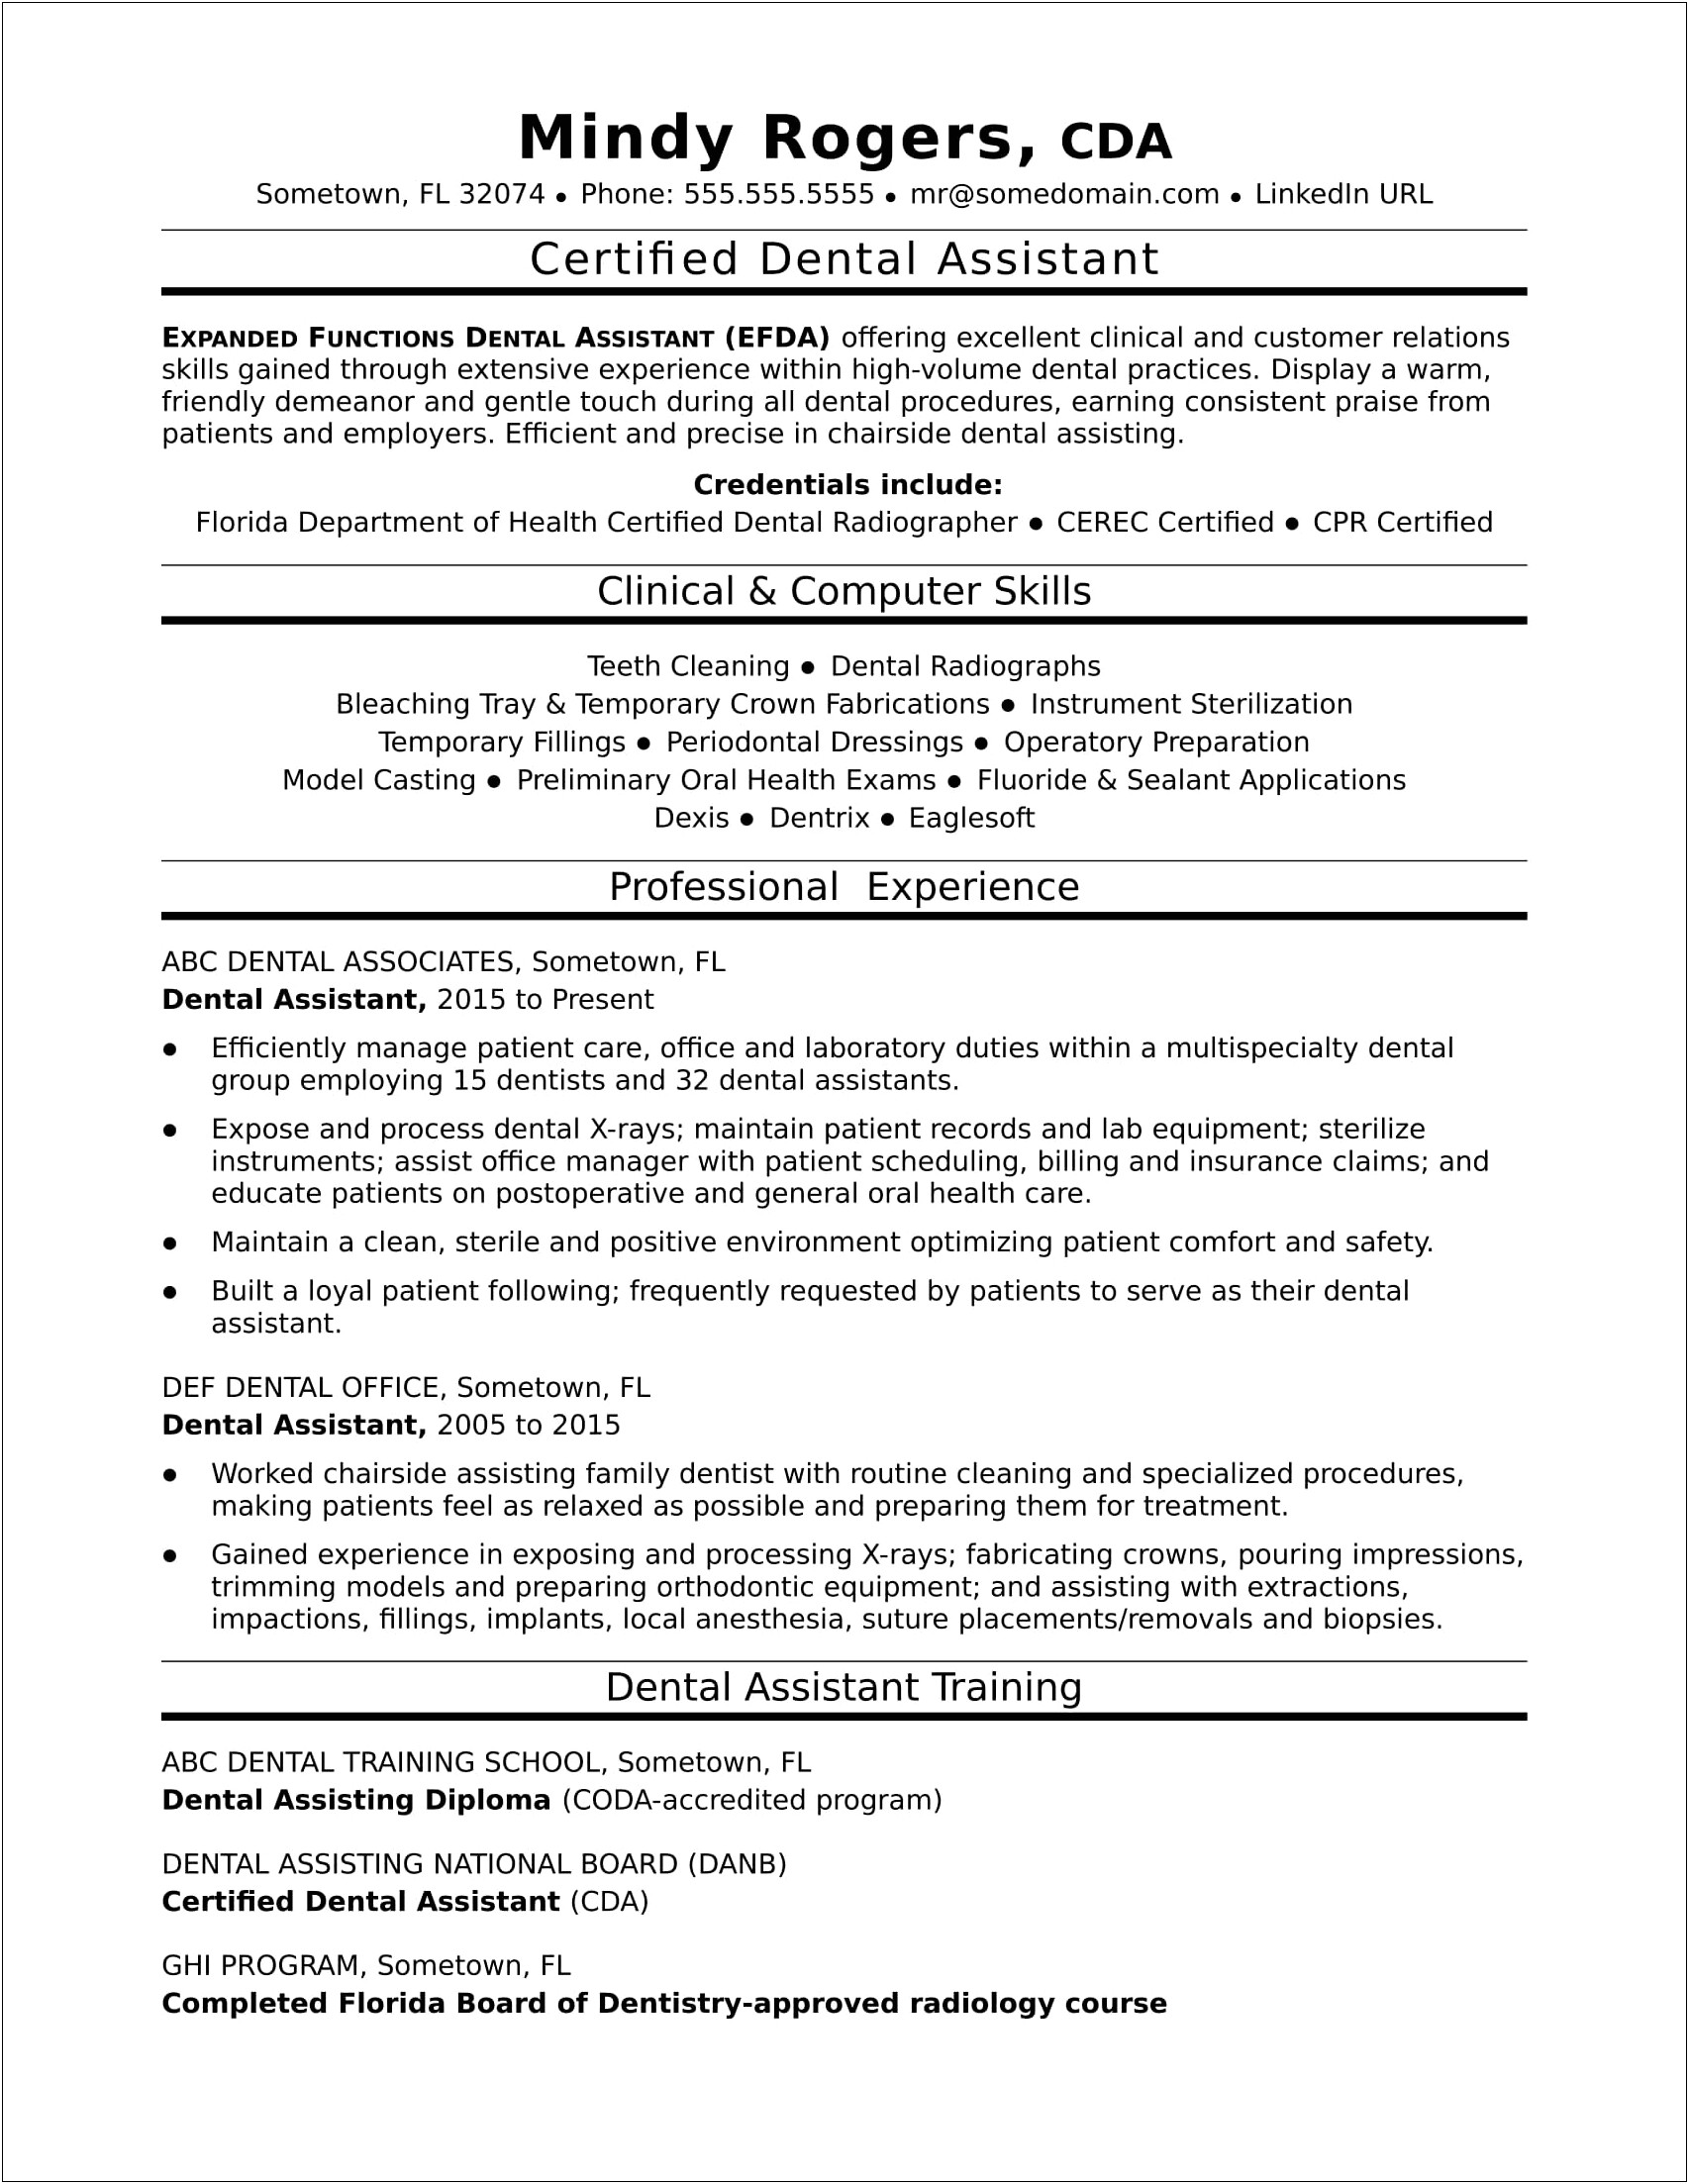 Specimen Processor Job Description For Resume